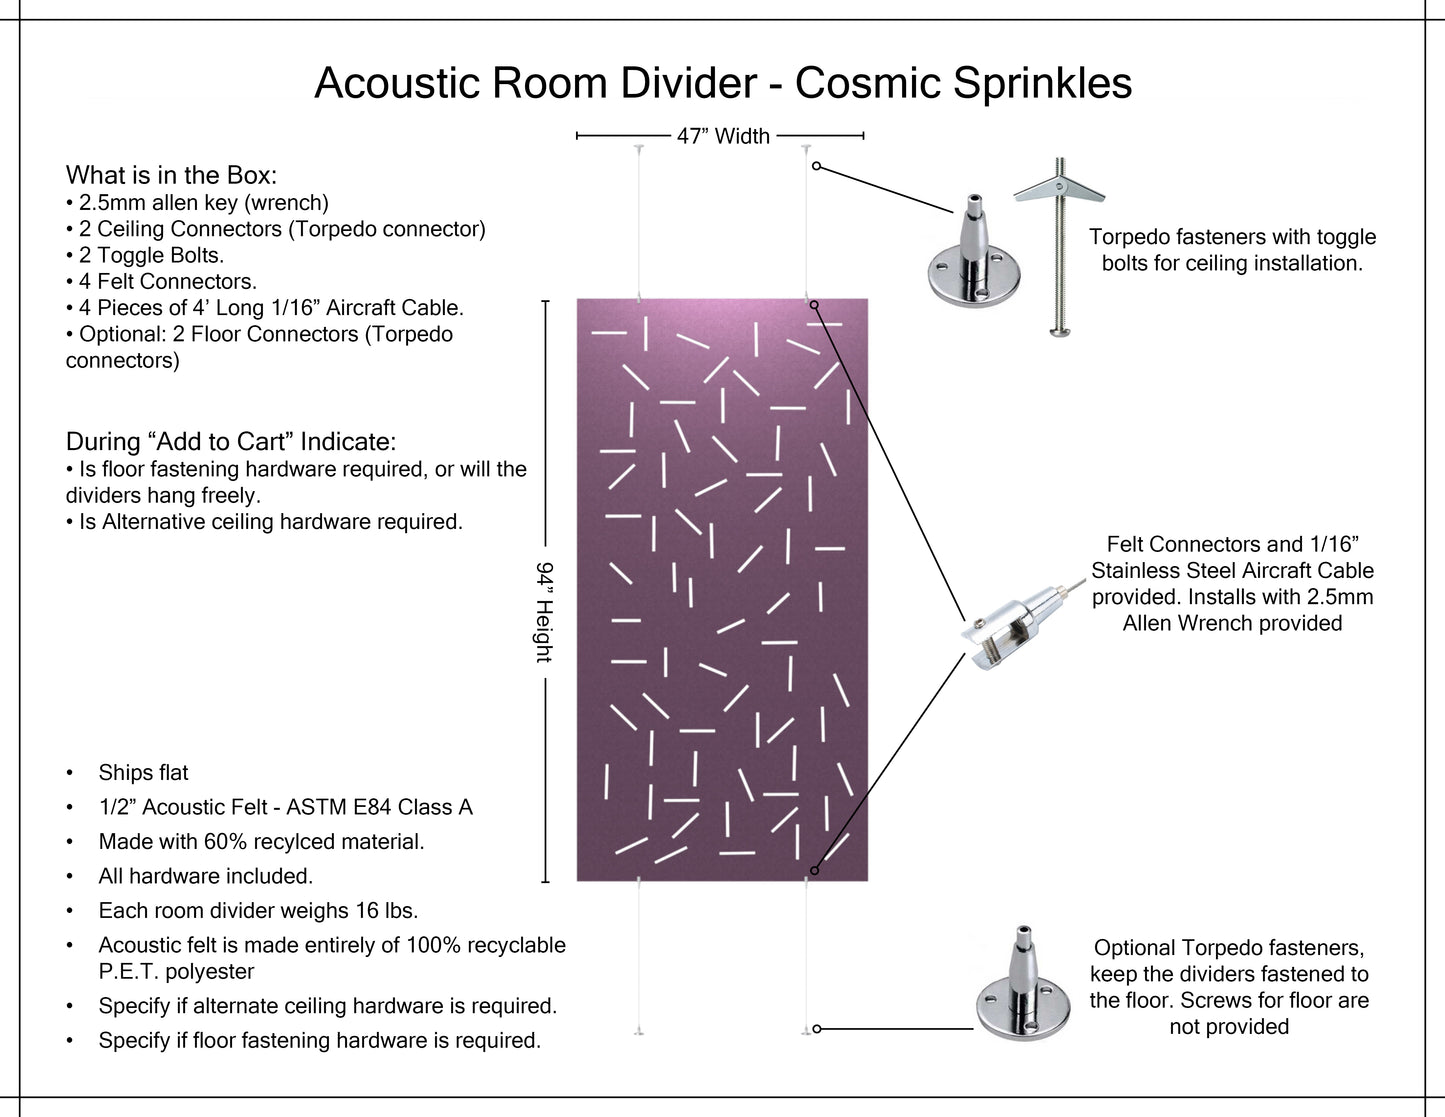 4x8 Acoustic Room Divider - Cosmic Sprinkles